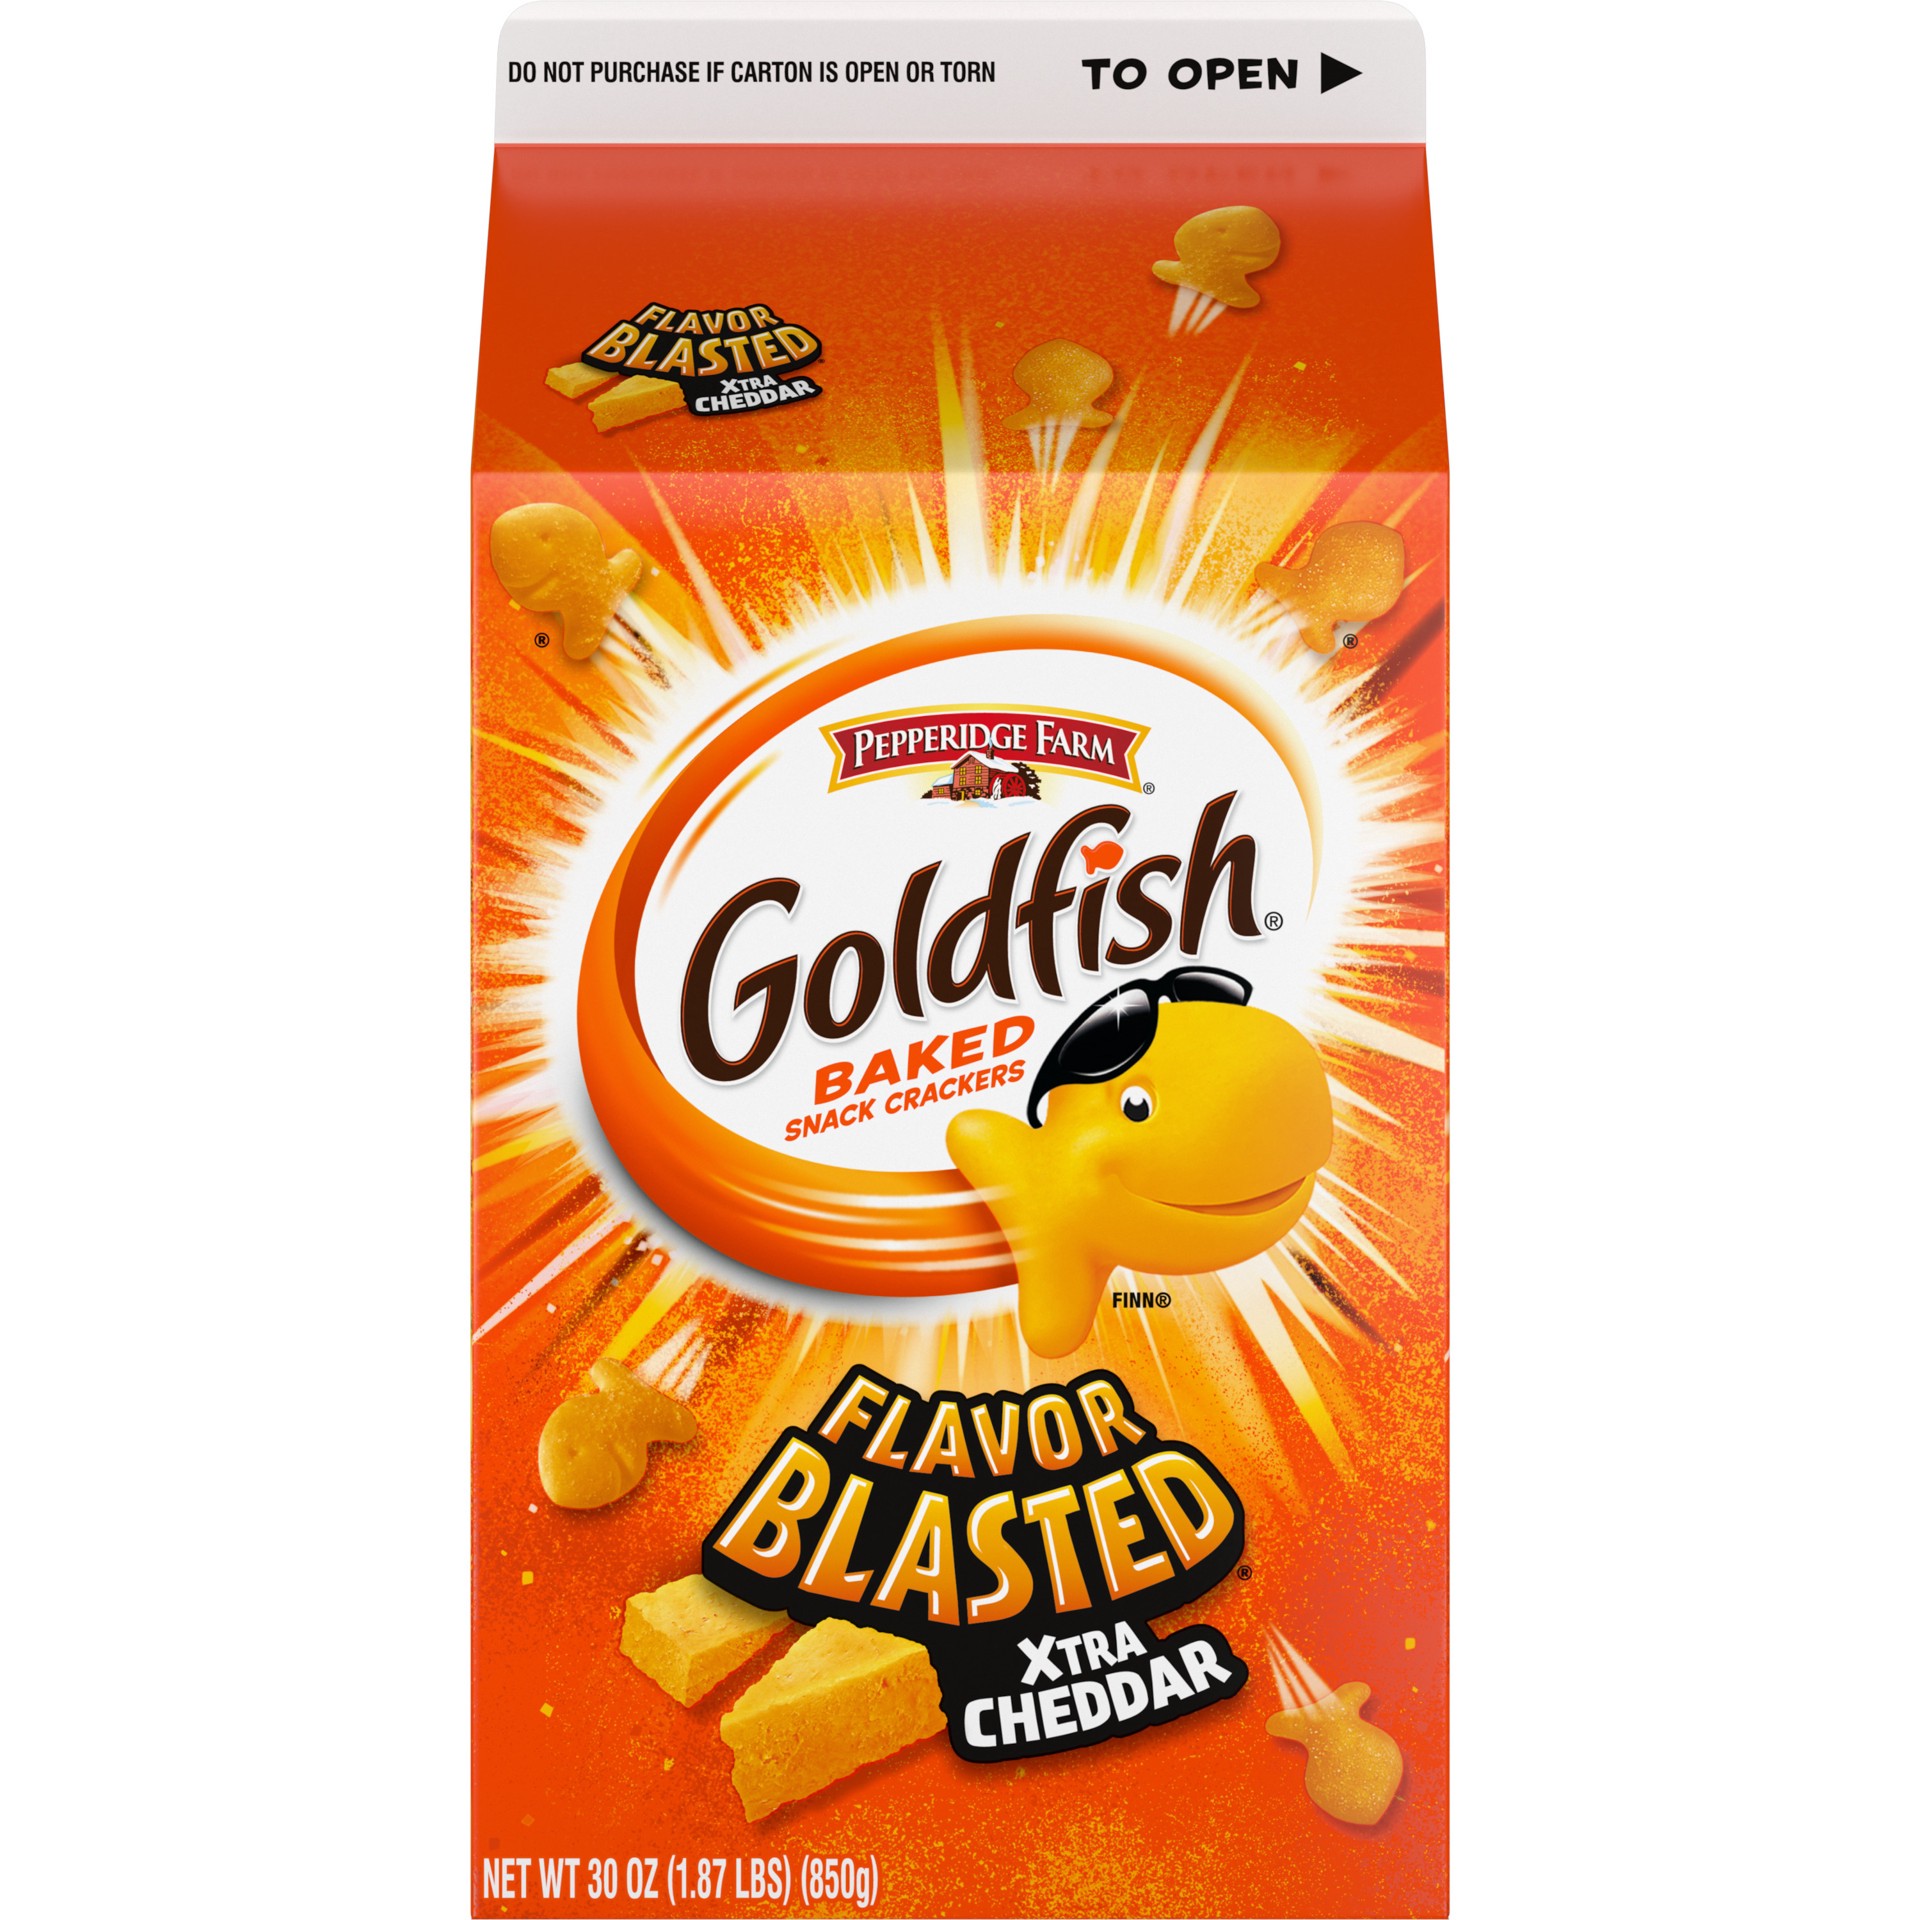 slide 4 of 5, Pepperidge Farm Goldfish Flavor Blasted Xtra Cheddar Cheese Crackers, 30 oz Carton, 30 oz